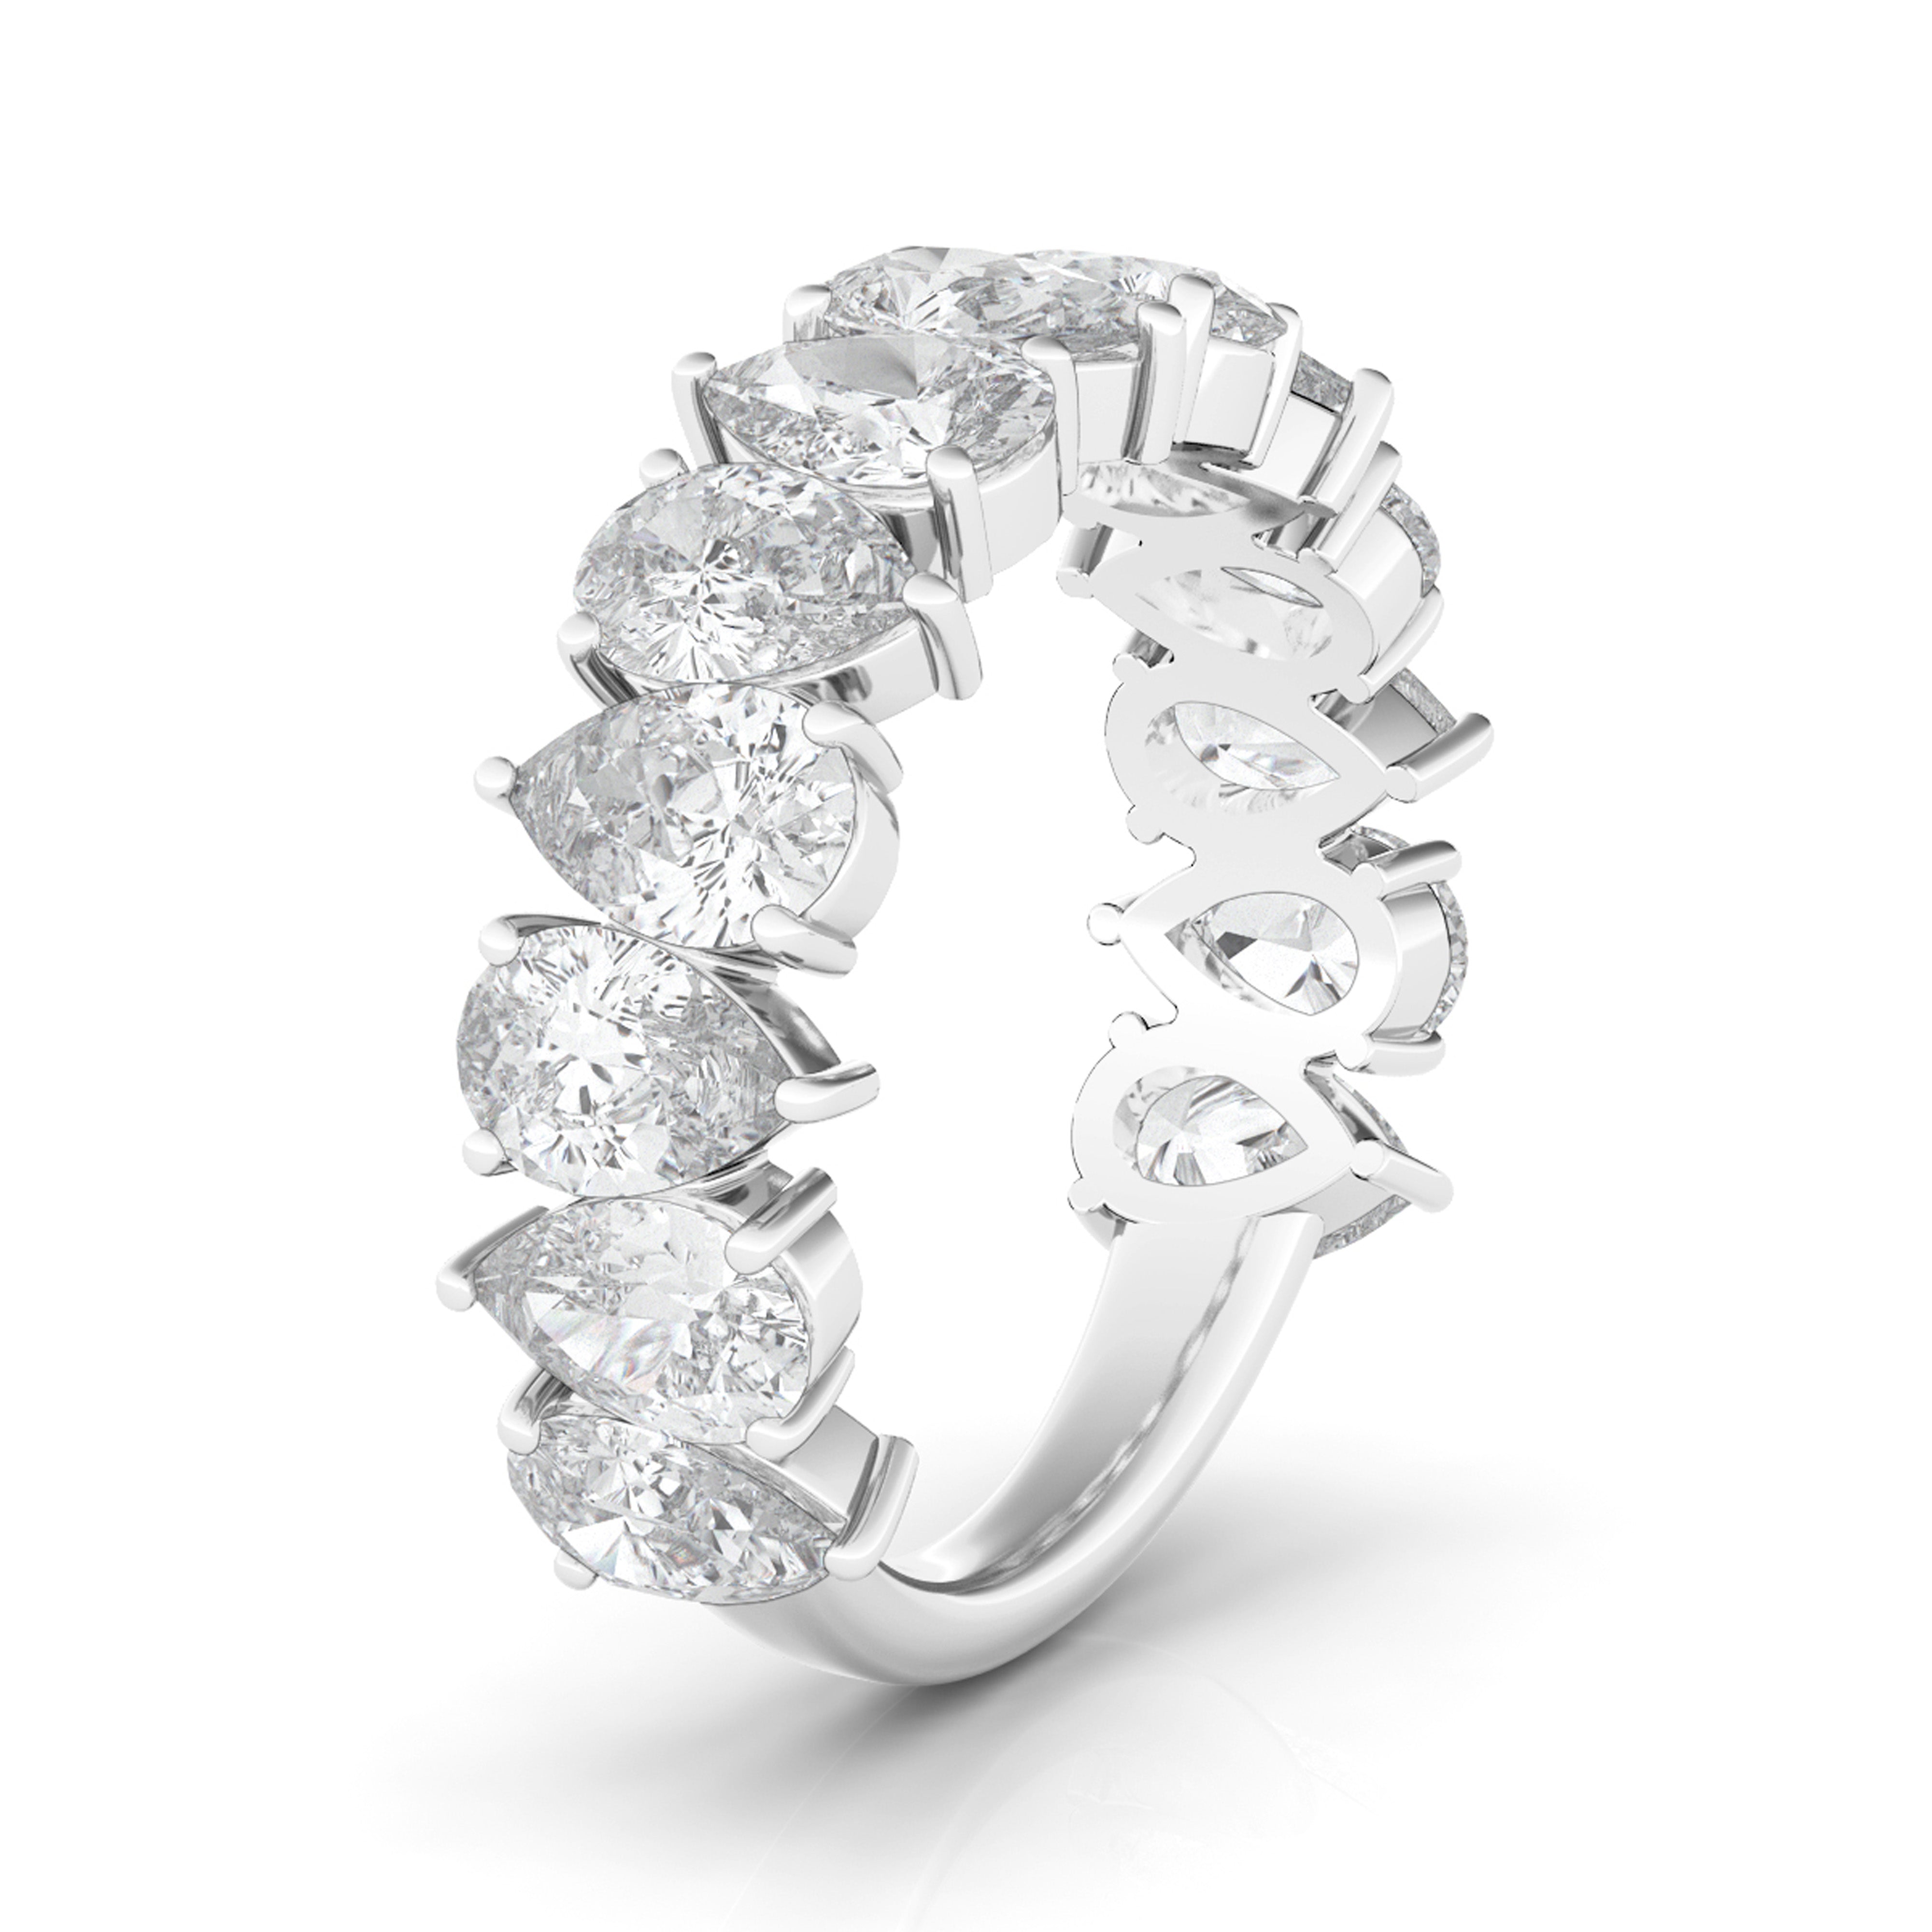 Ball & Chain Pear Shape Diamond Pendant